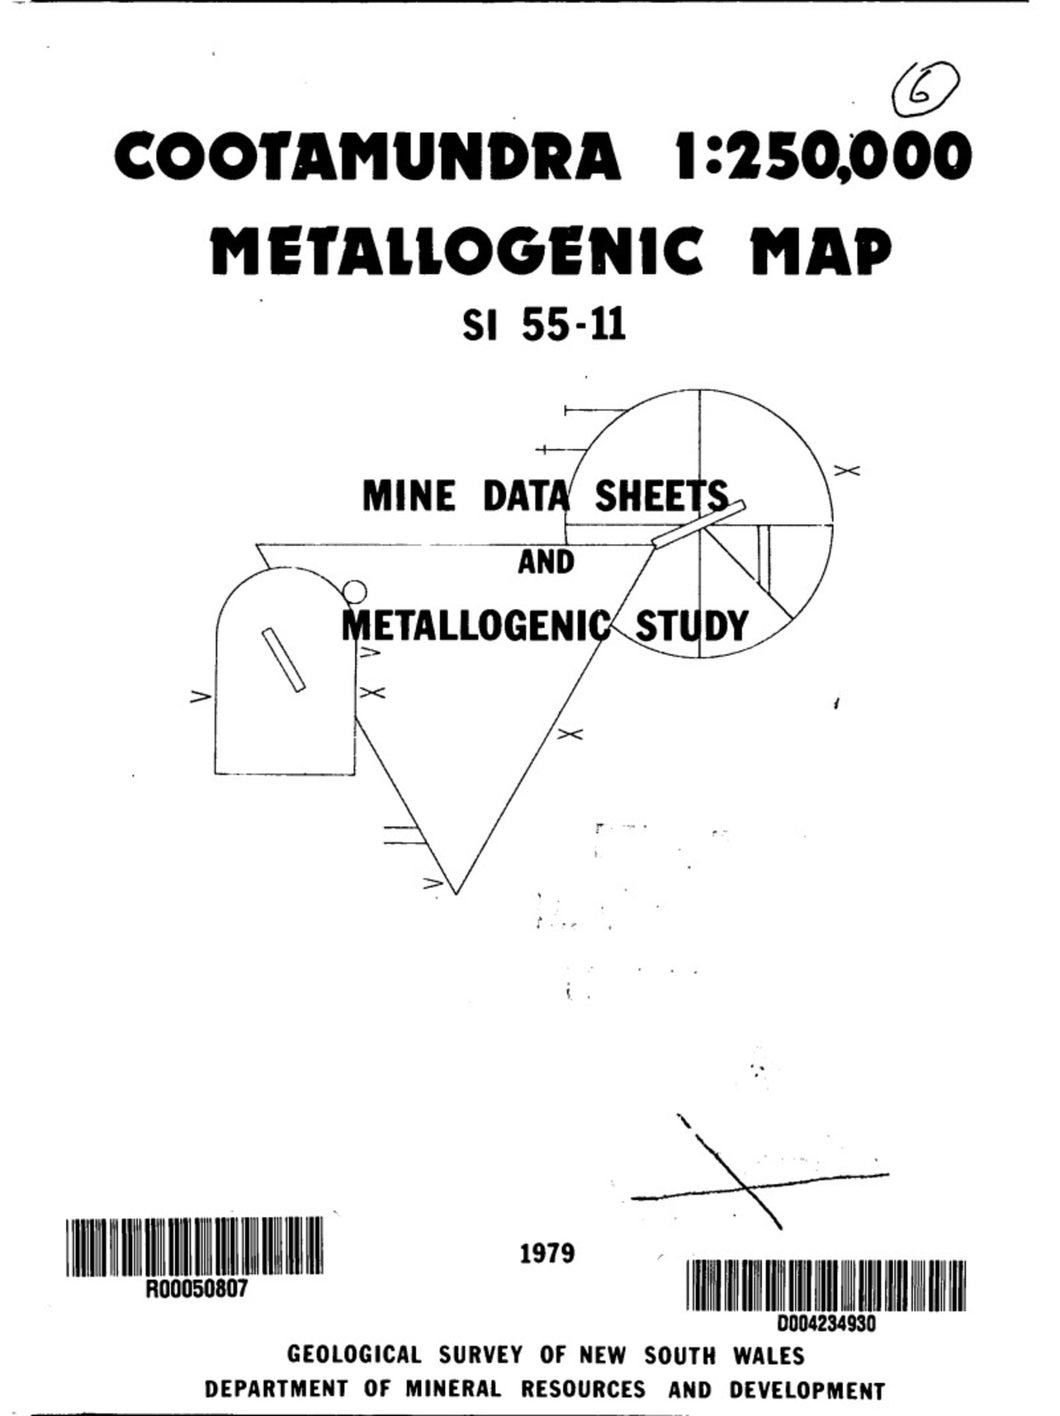 Cootamundra Metallogenic Map explanatory notes (1979)